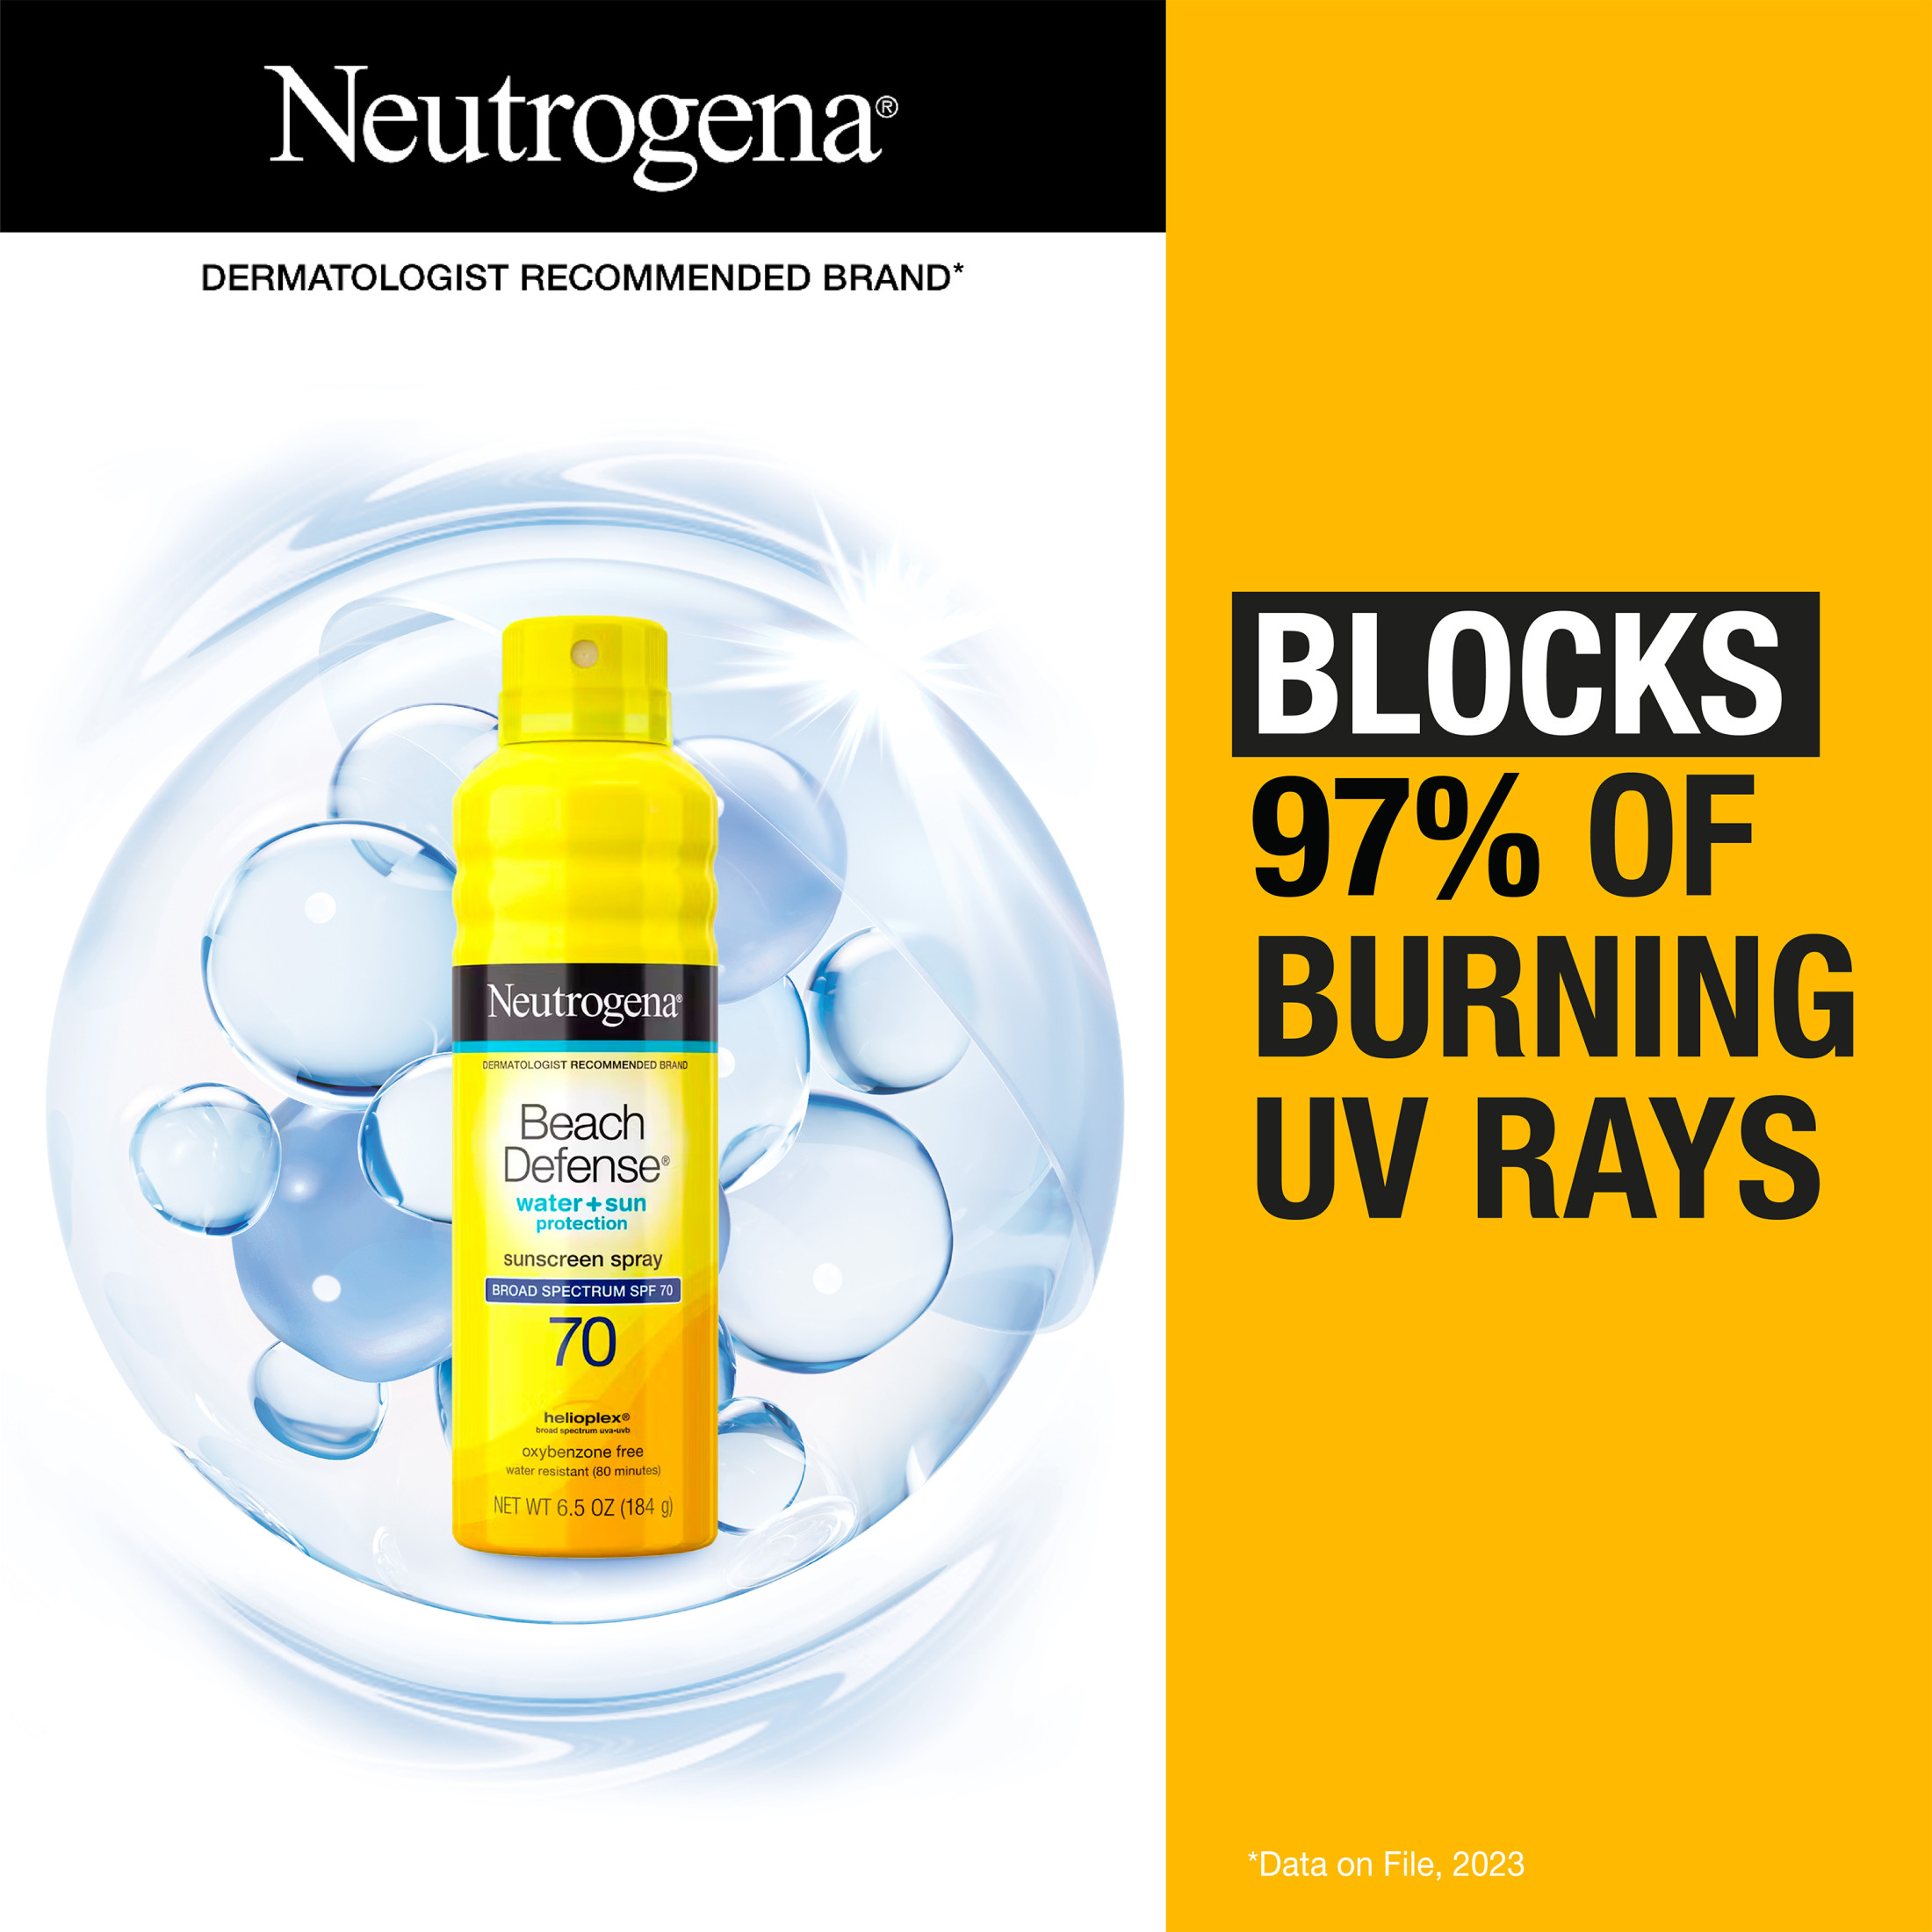 Neutrogena Beach Defense Oil-Free Body Sunscreen Spray, SPF 70 Sunblock, 6.5 oz - image 3 of 10